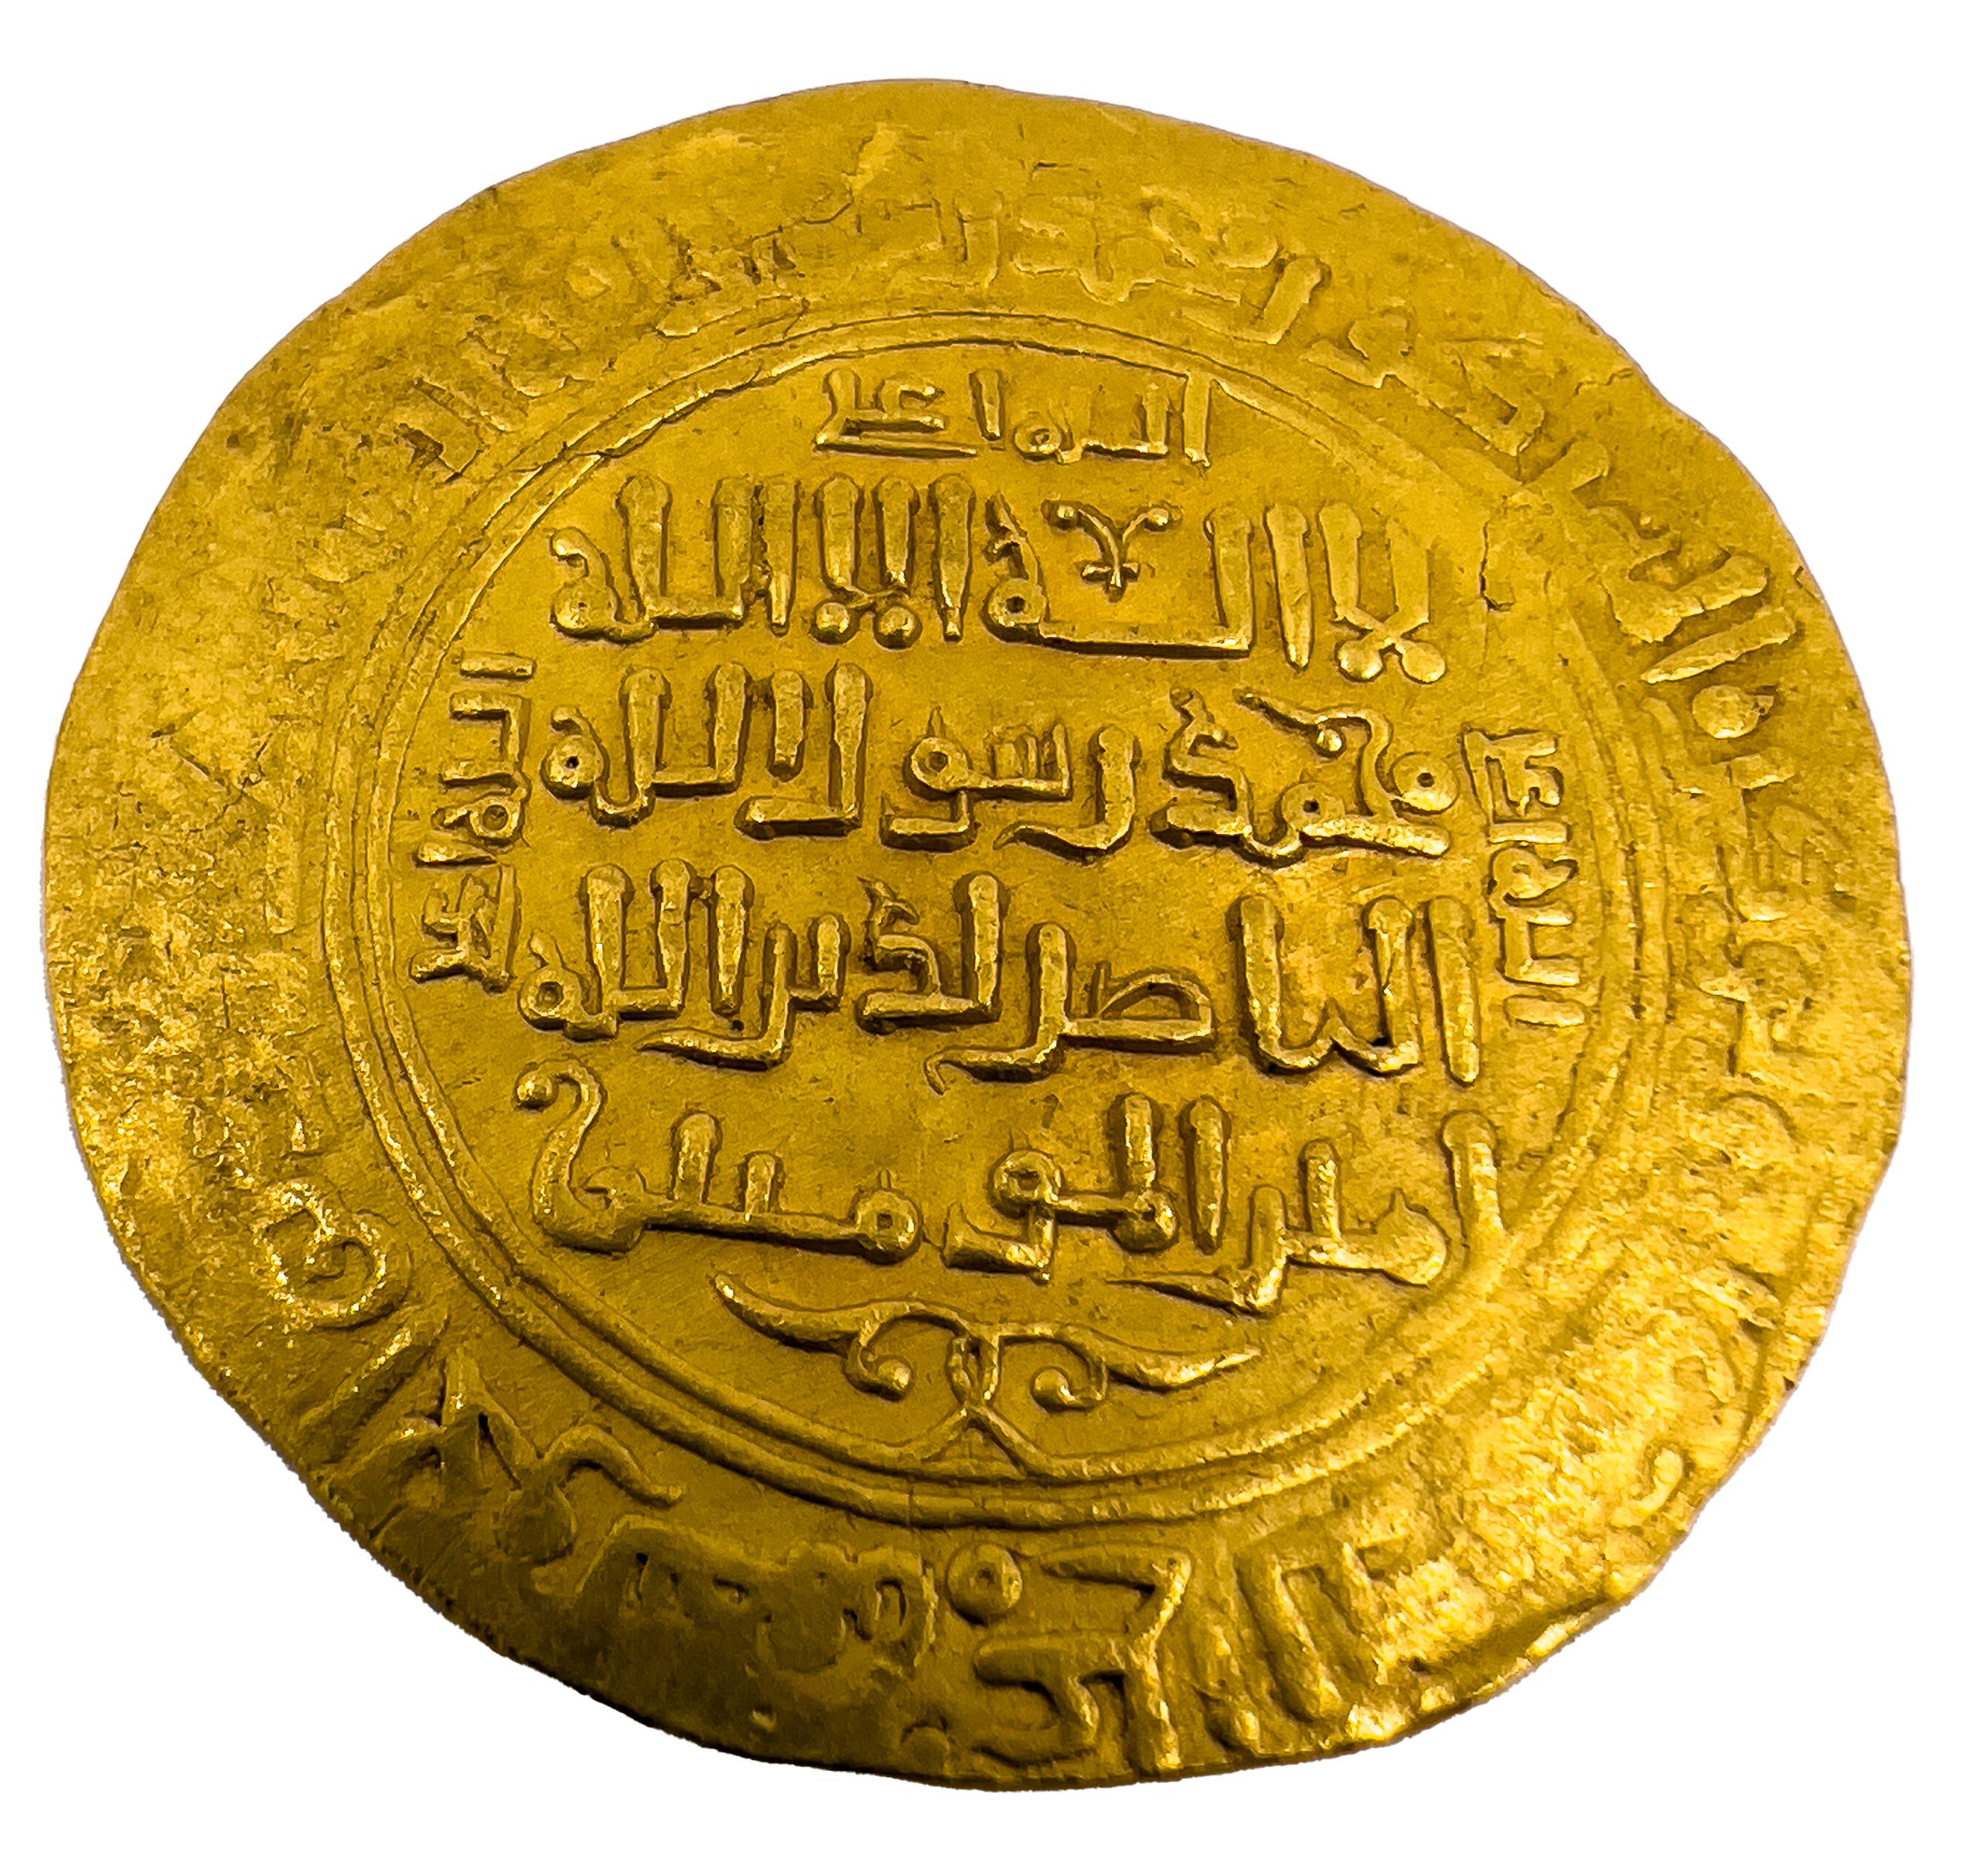 13th century coins